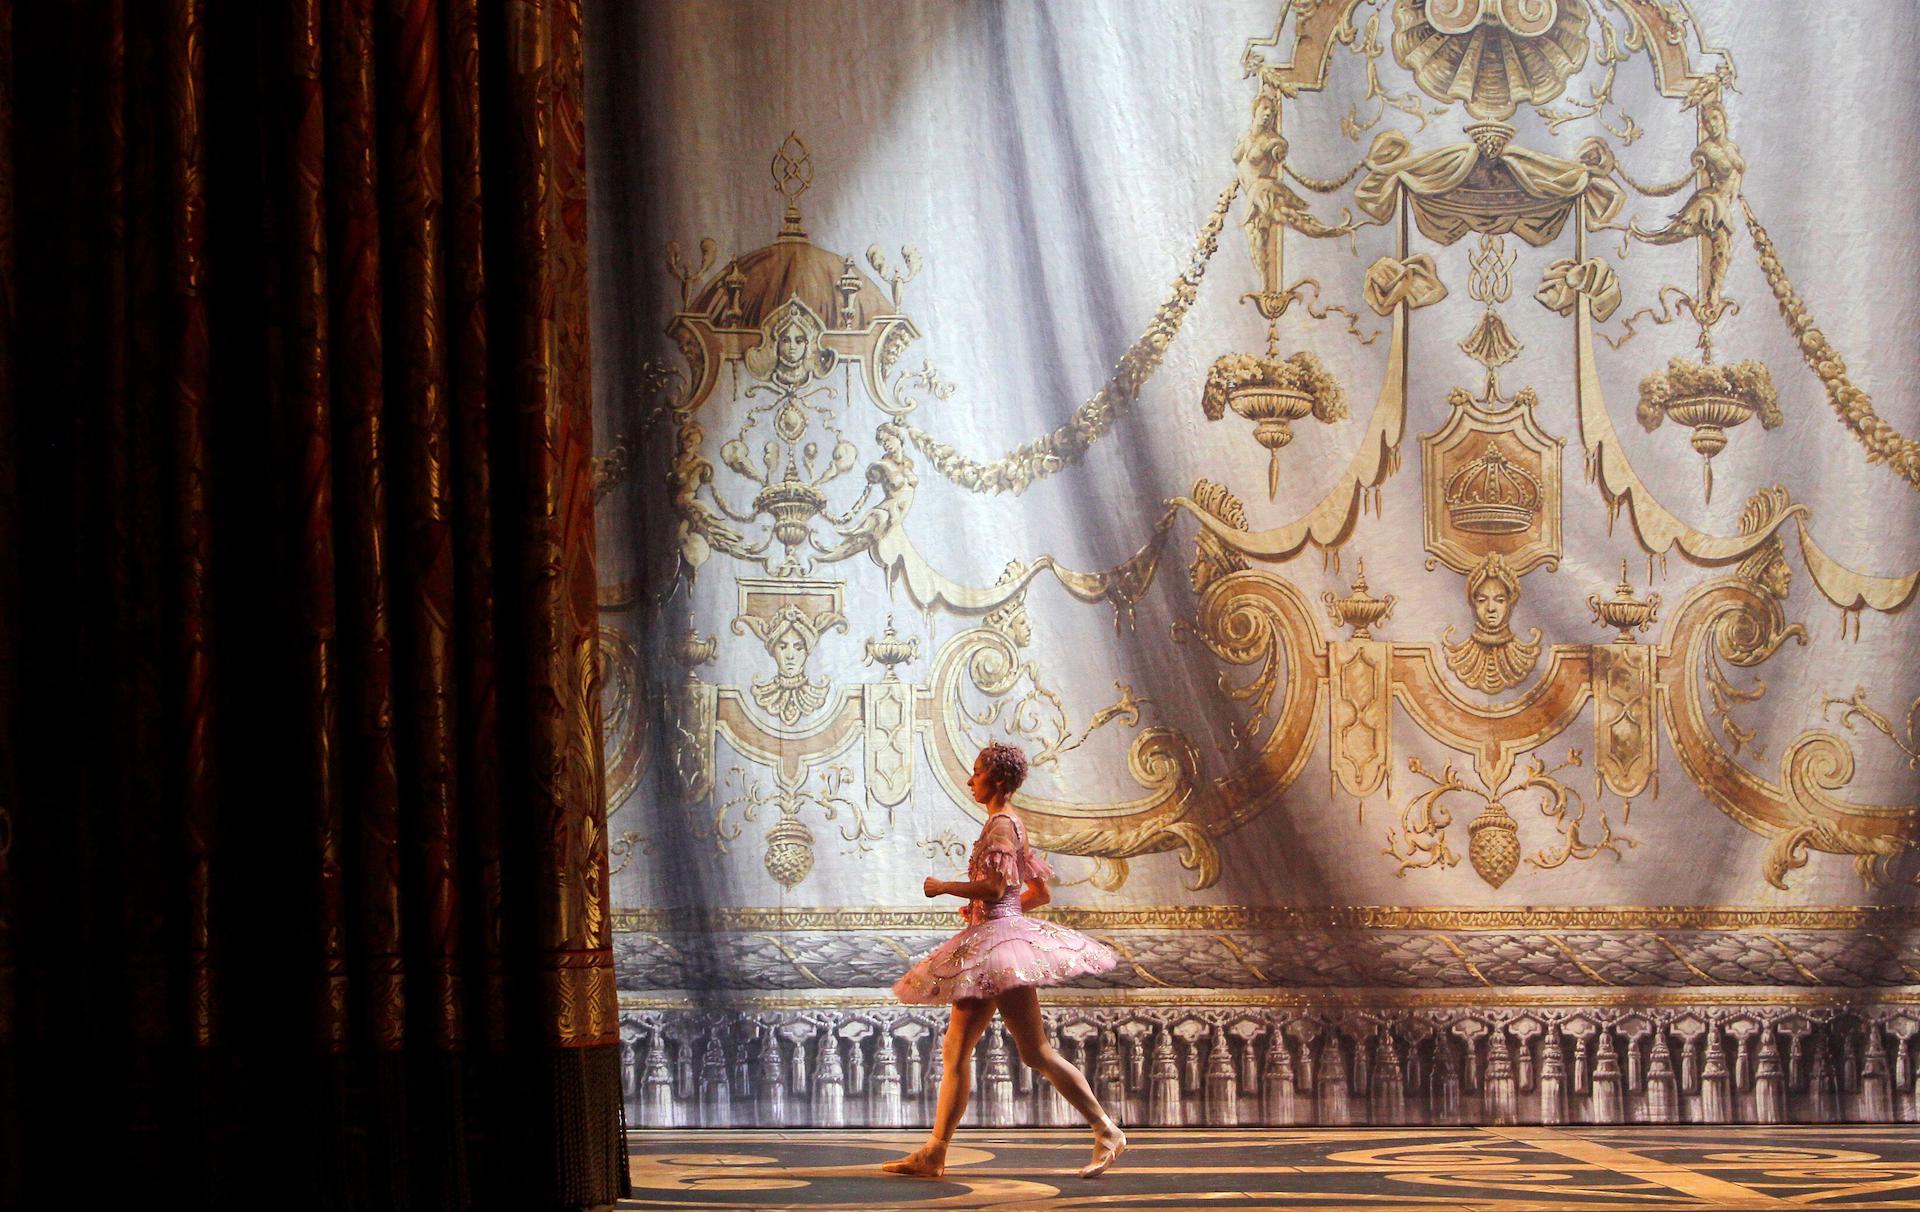 Turning inward: a rehearsal at the Bolshoi. Photo: Denis Sinyakov/Alamy